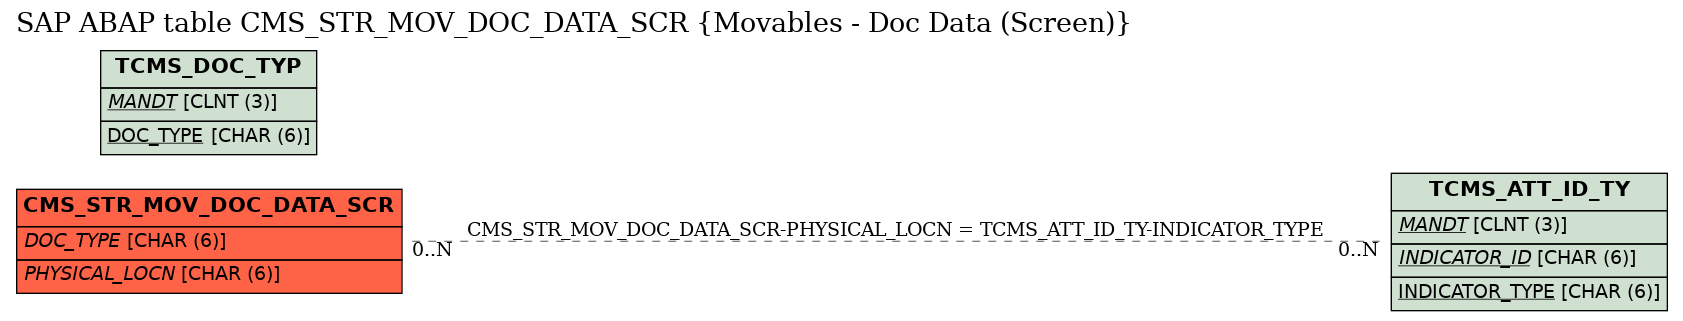 E-R Diagram for table CMS_STR_MOV_DOC_DATA_SCR (Movables - Doc Data (Screen))